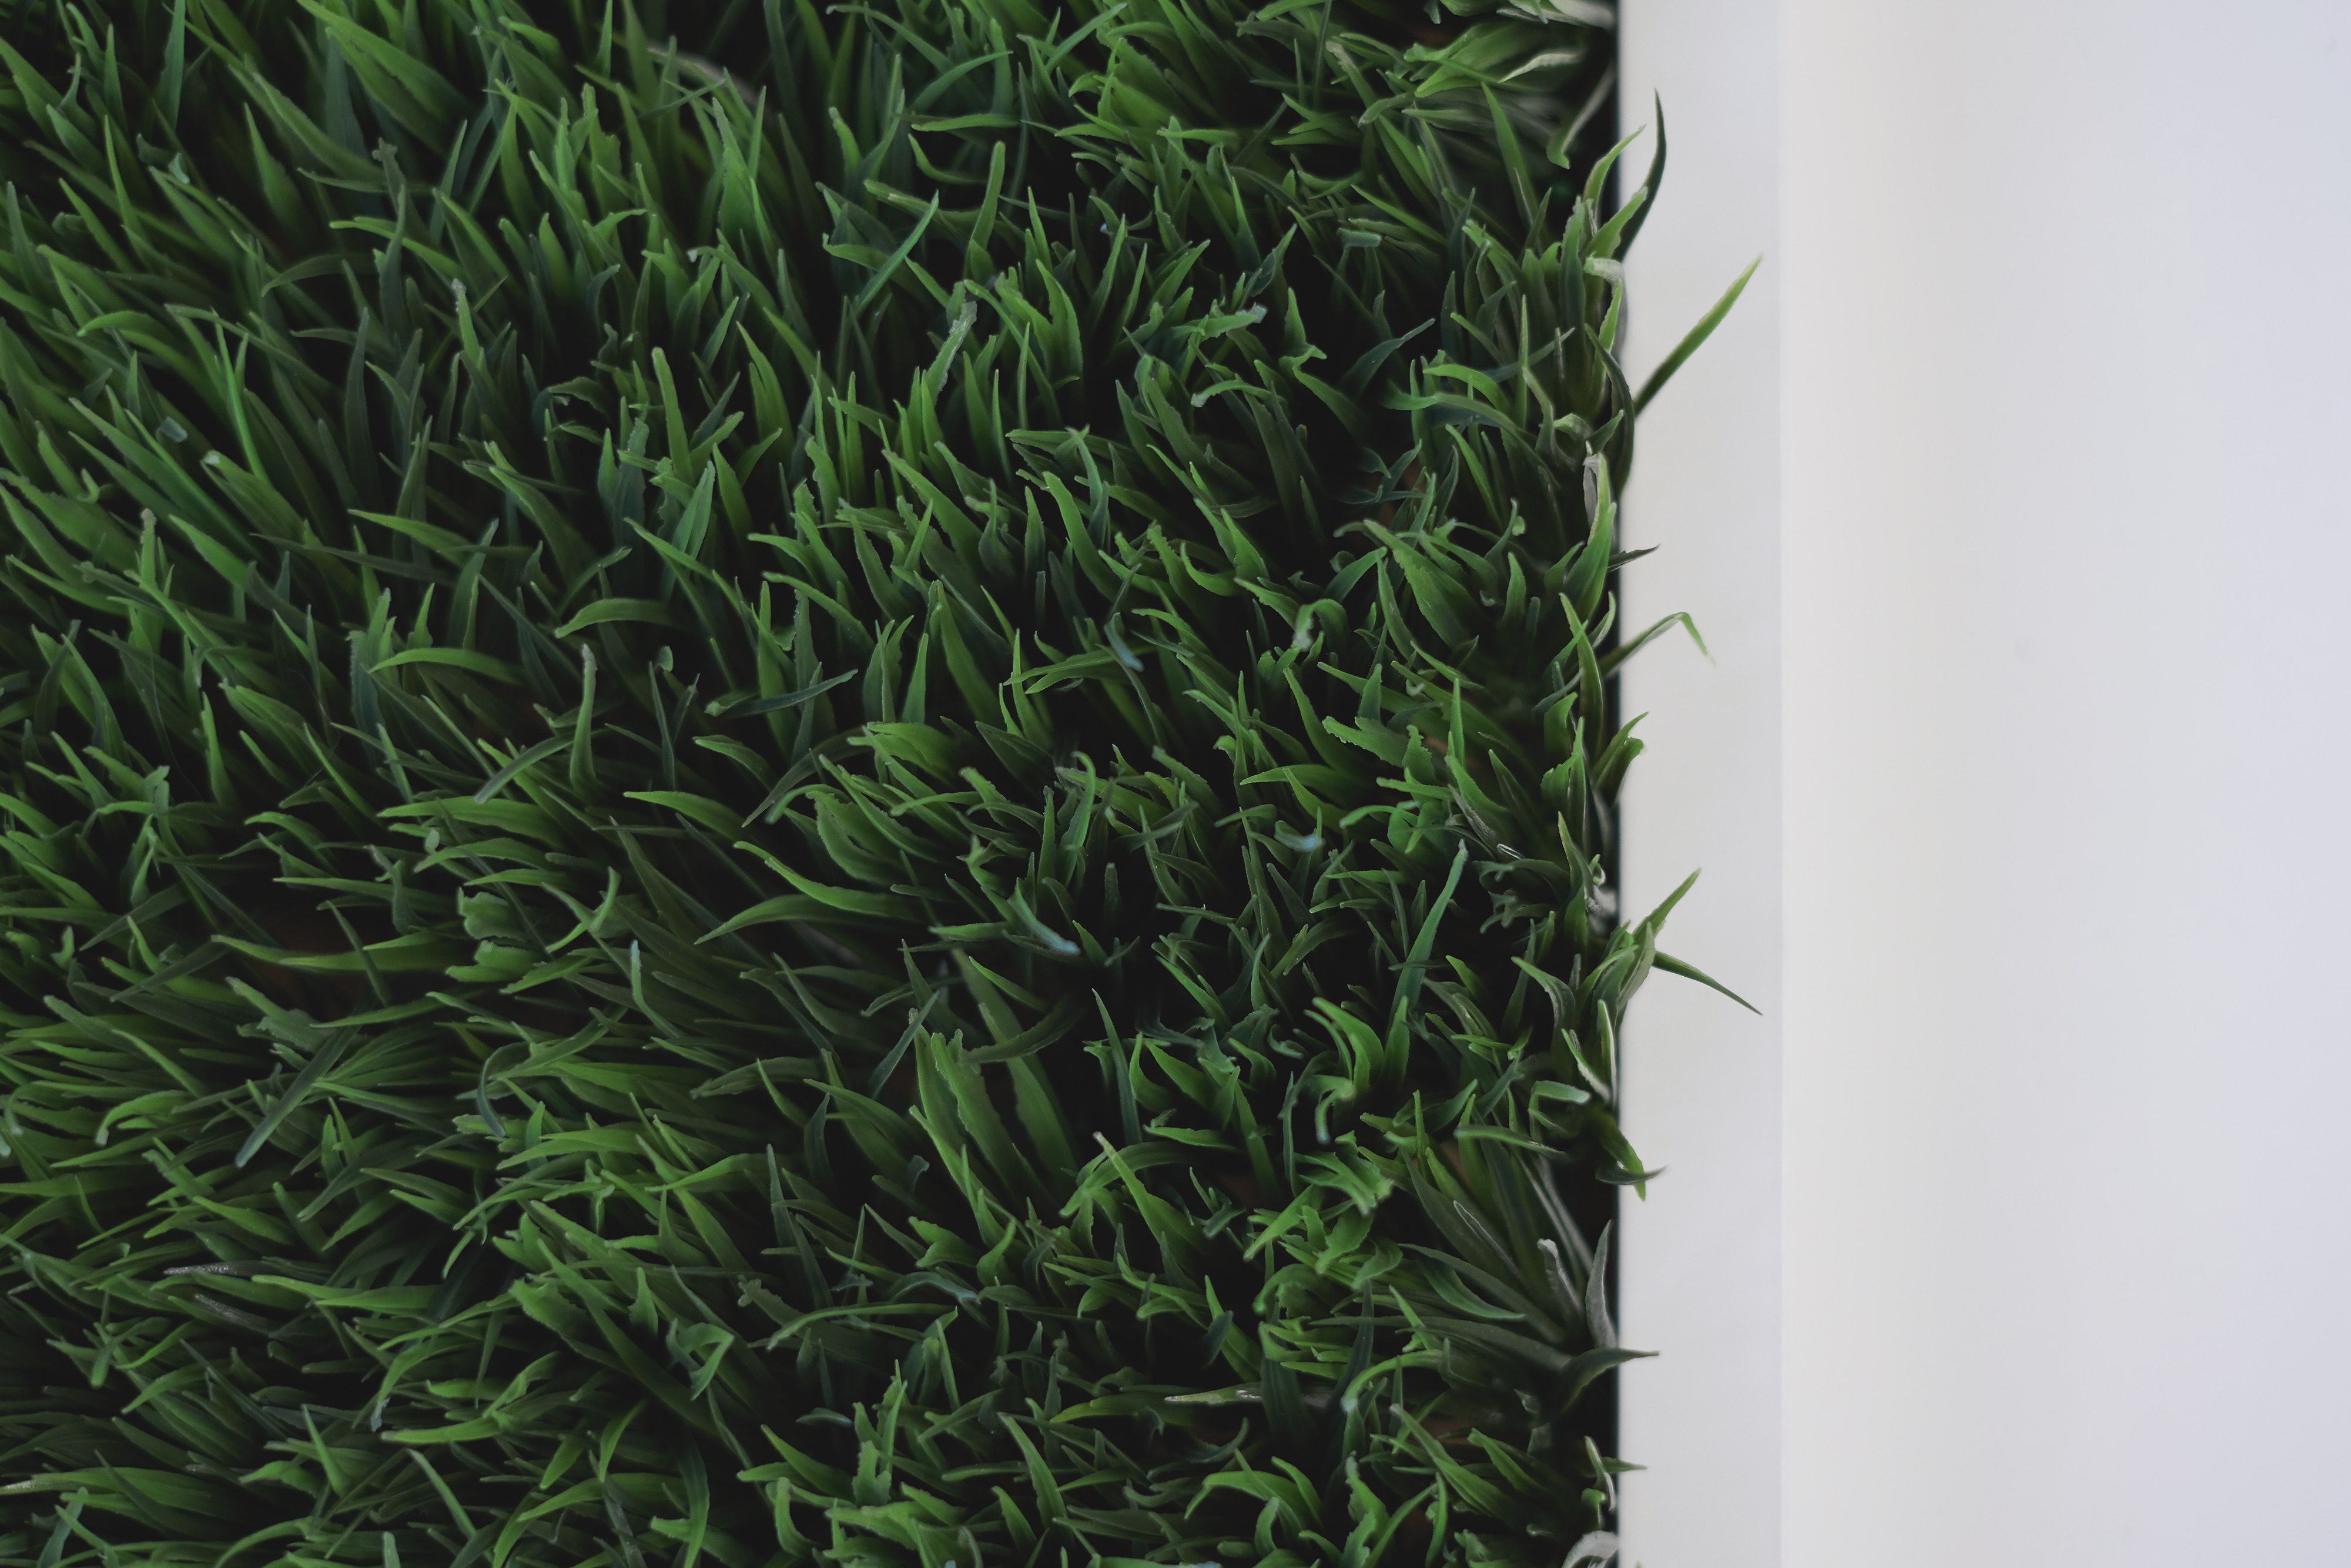 Lawn fertilizer leads to greener grass